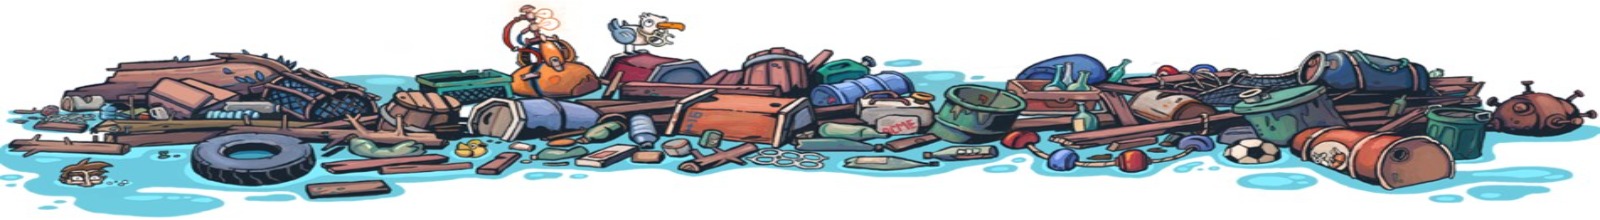 Various types of garbage floating in a lake